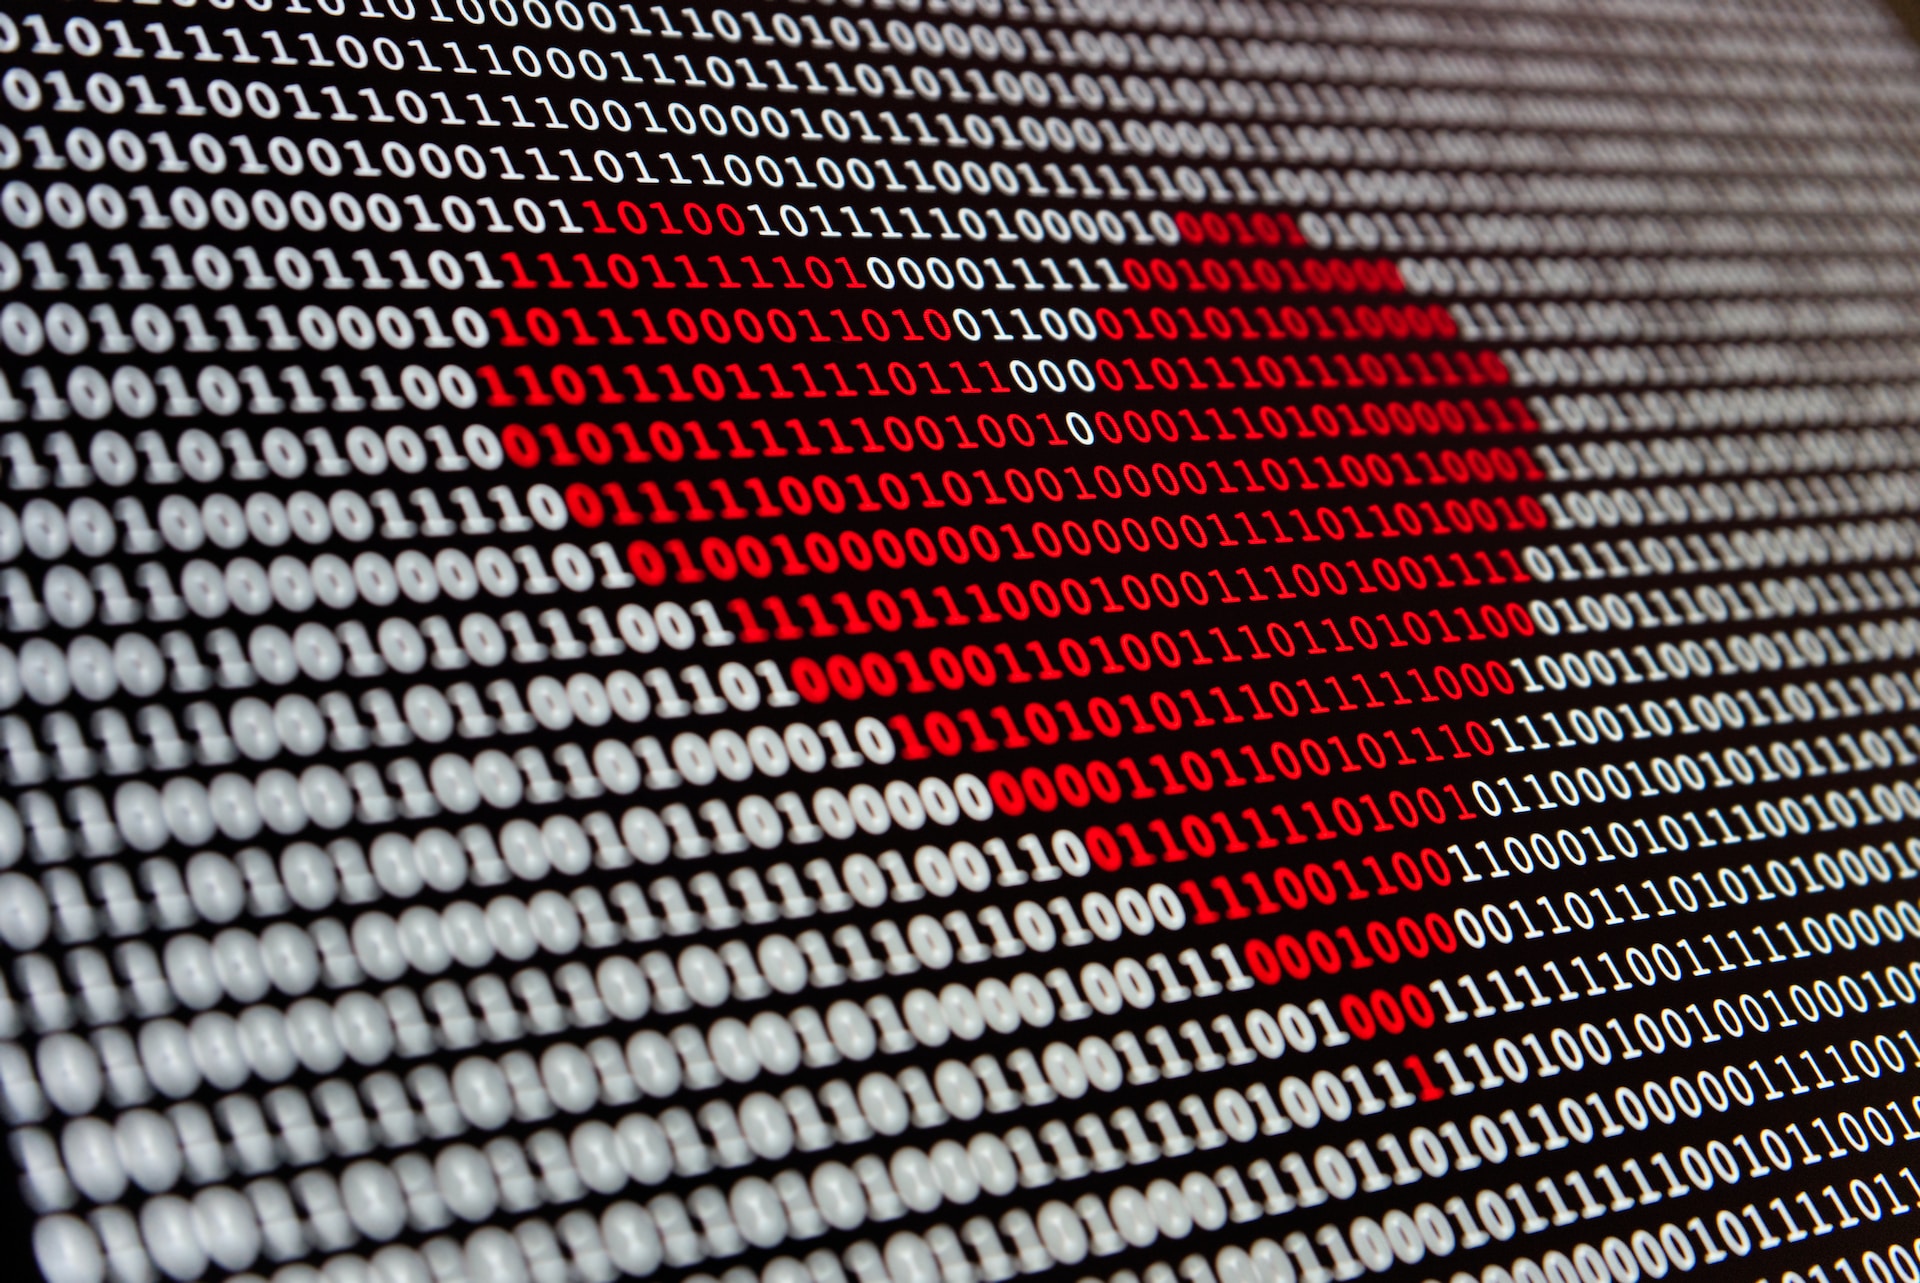 binary code displaying a red heart